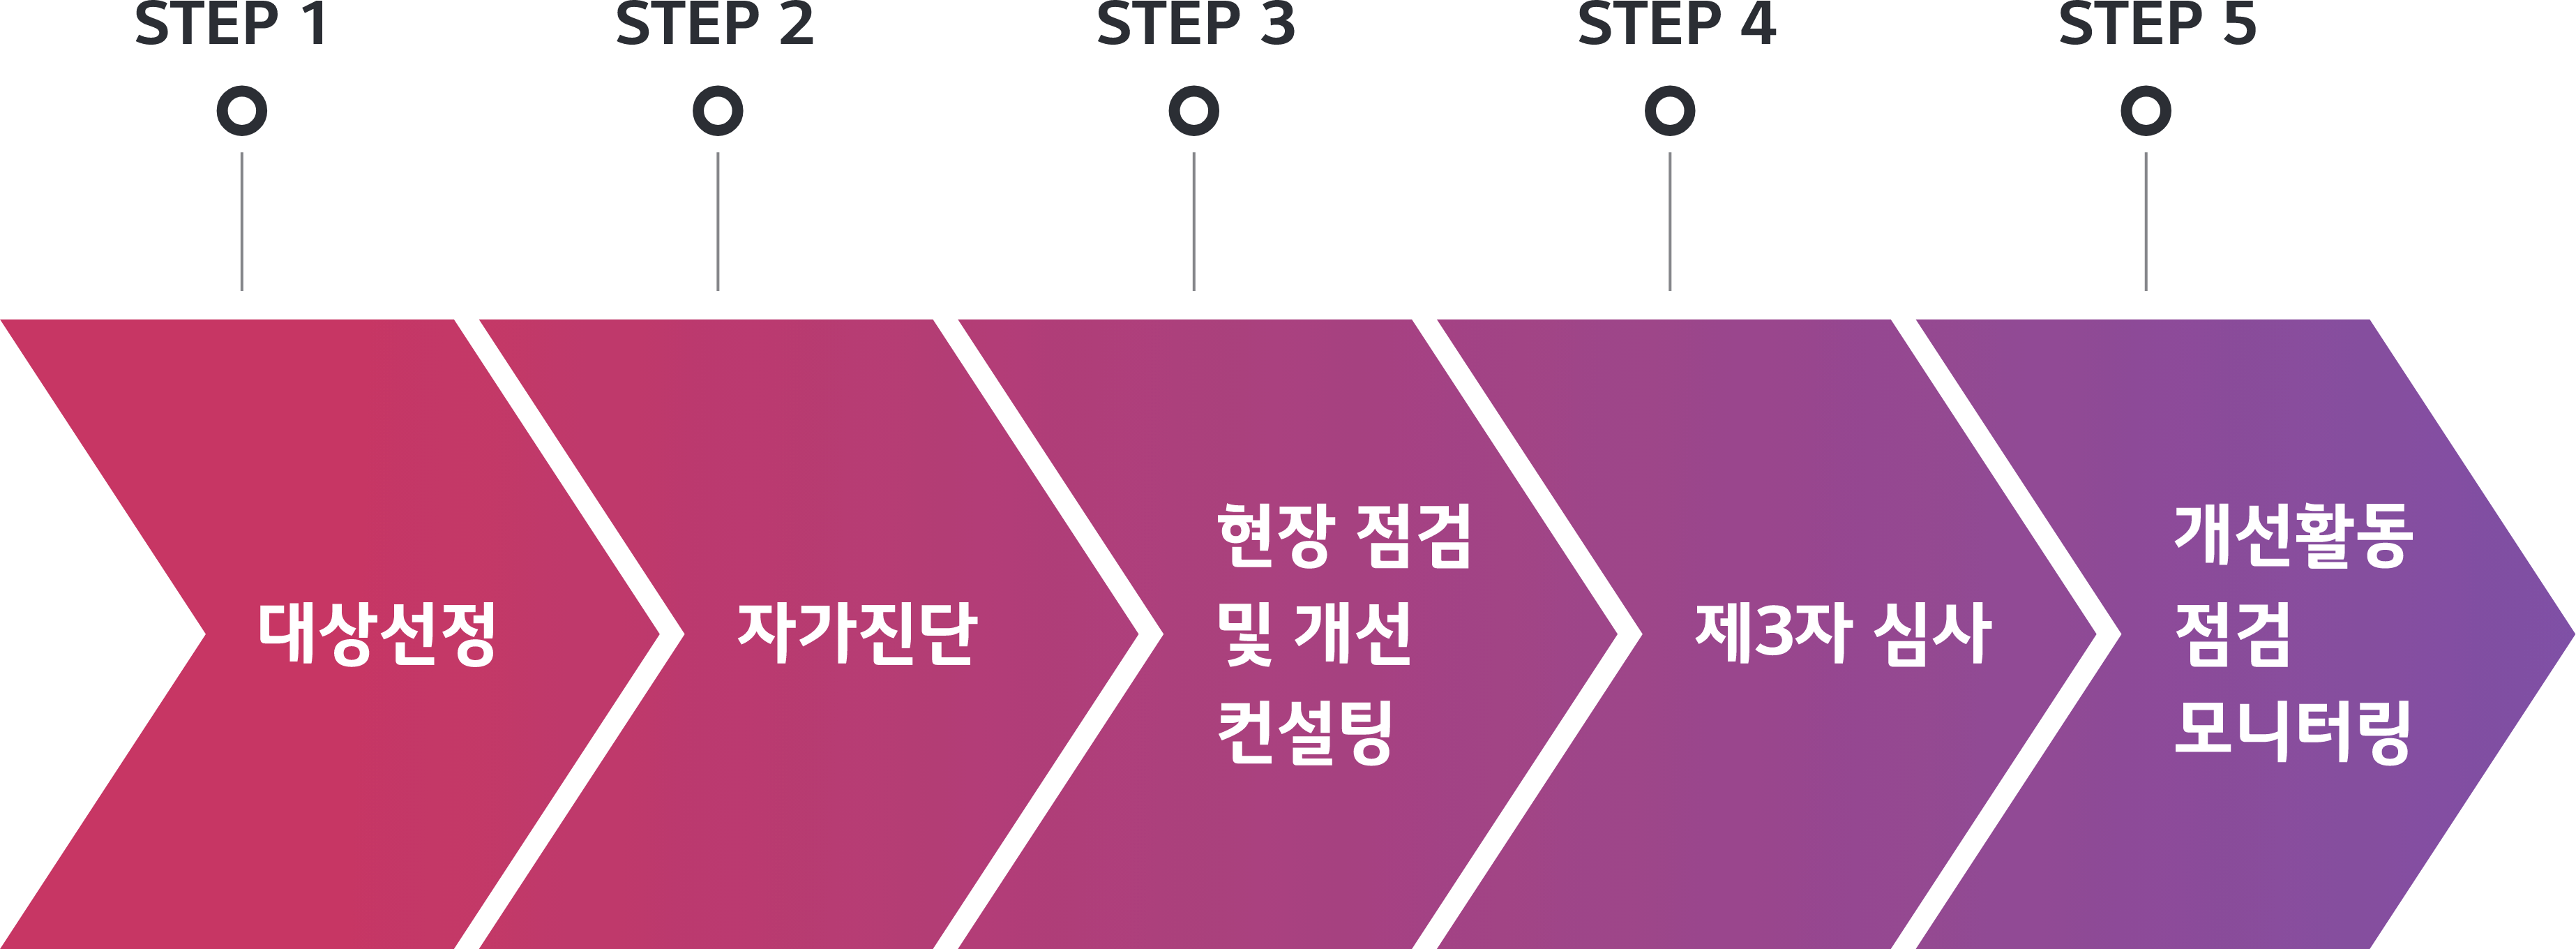 (STEP 1)대상선정 → (STEP 2)자가진단 → (STEP 3)현장 점검 및 개선 컨설팅 → (STEP 4)제3자 심사 → (STEP 5)개선활동 점검 모니터링